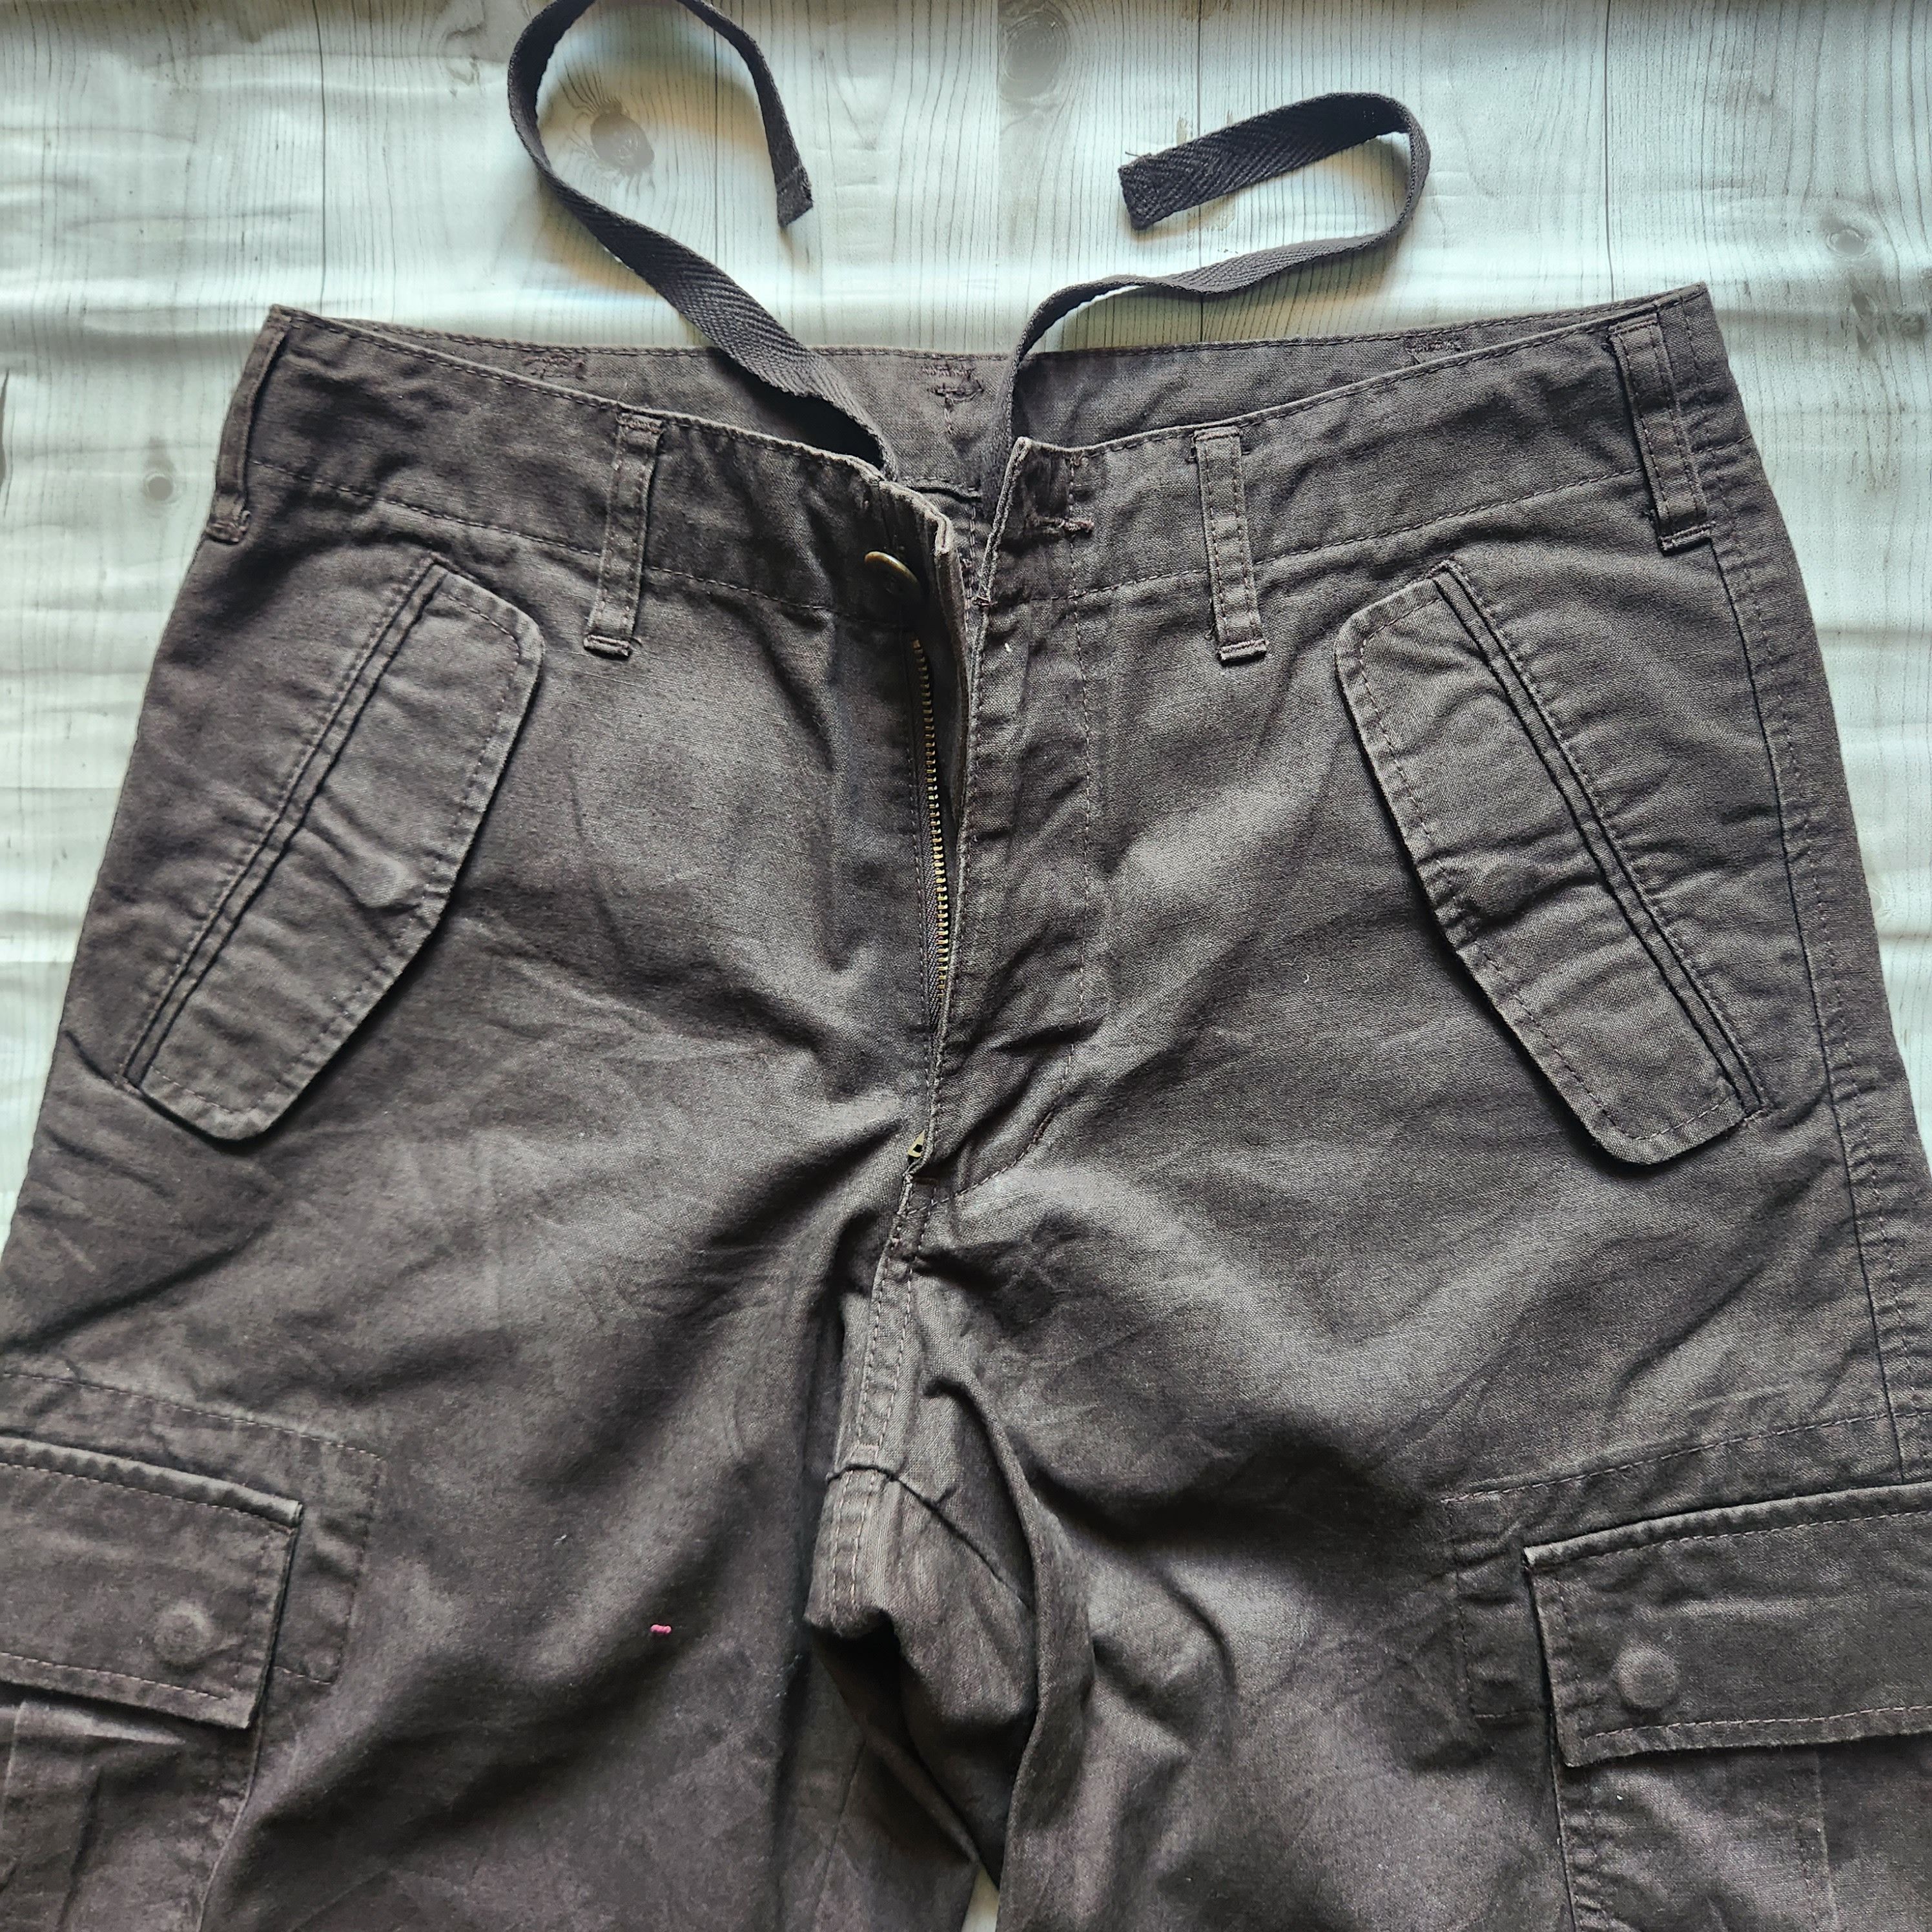 Uniqlo Tactical Pants Cargo Pockets - 11